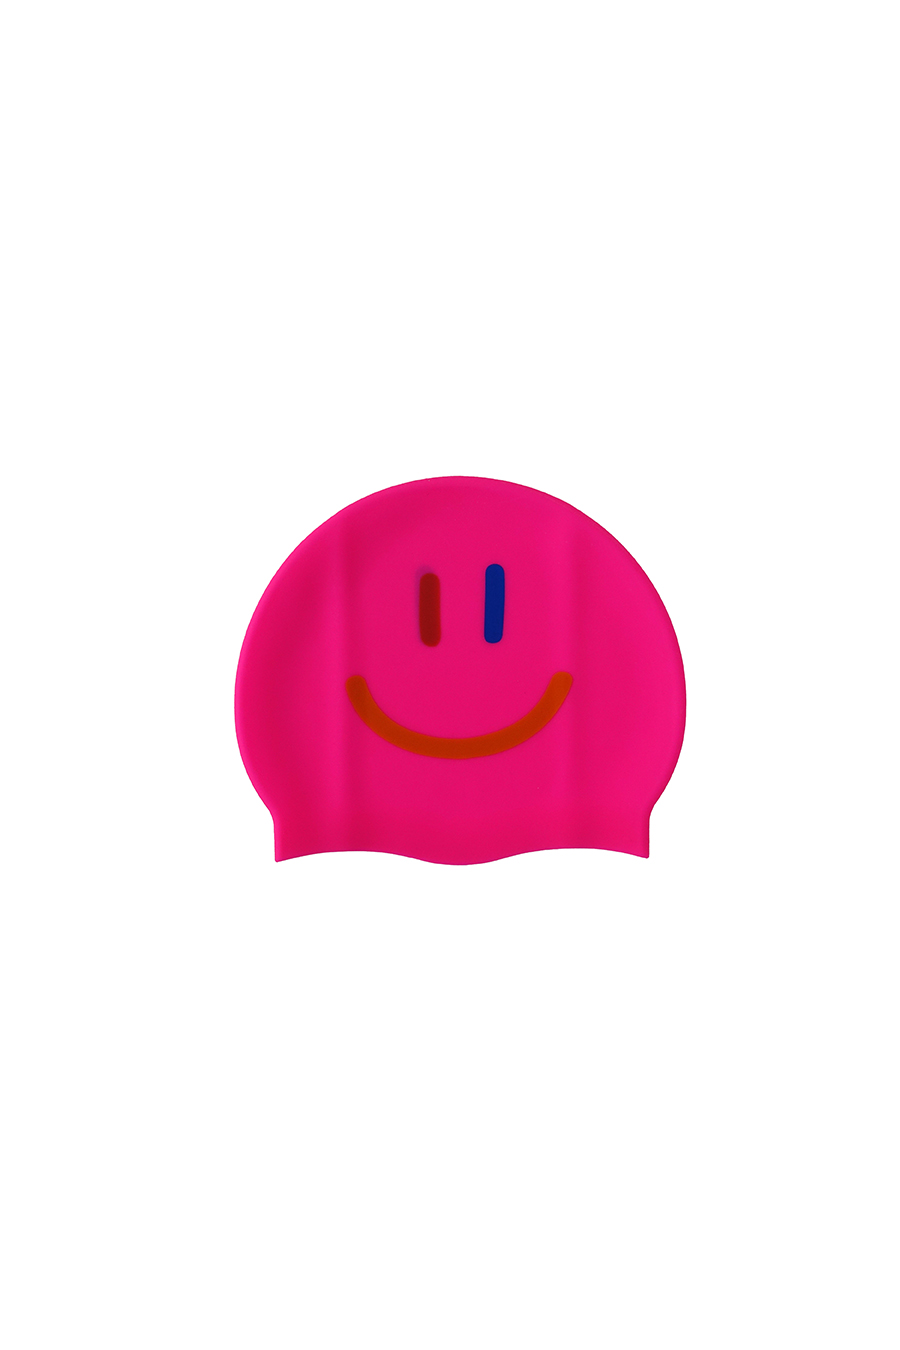 LaLa Swimming Cap [Hot Pink]